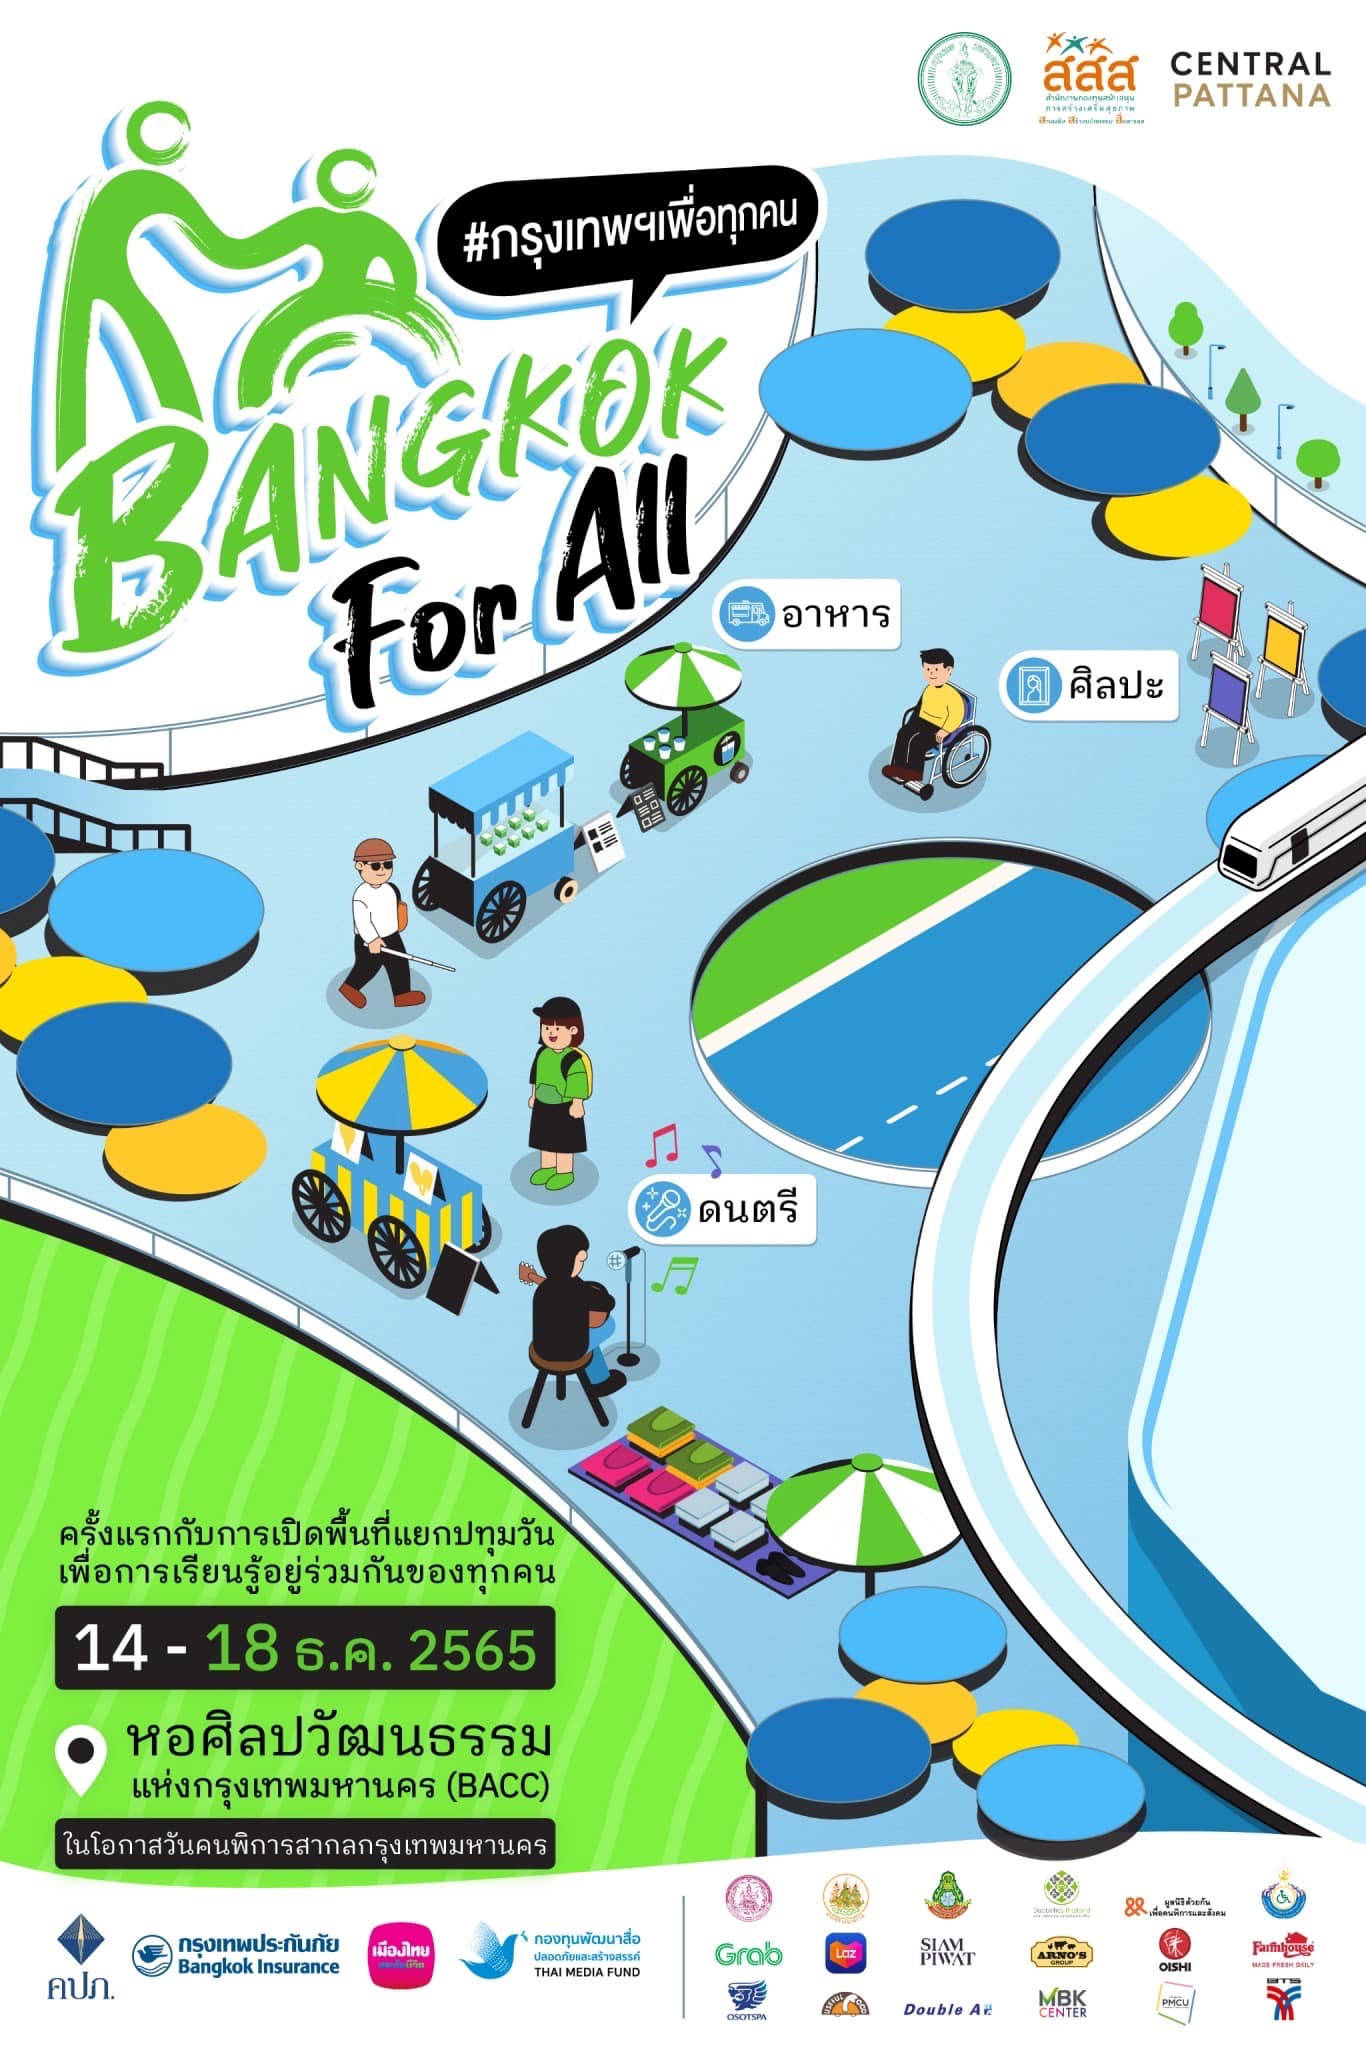 Bangkok for all กรุงเทพฯ เพื่อทุกคน